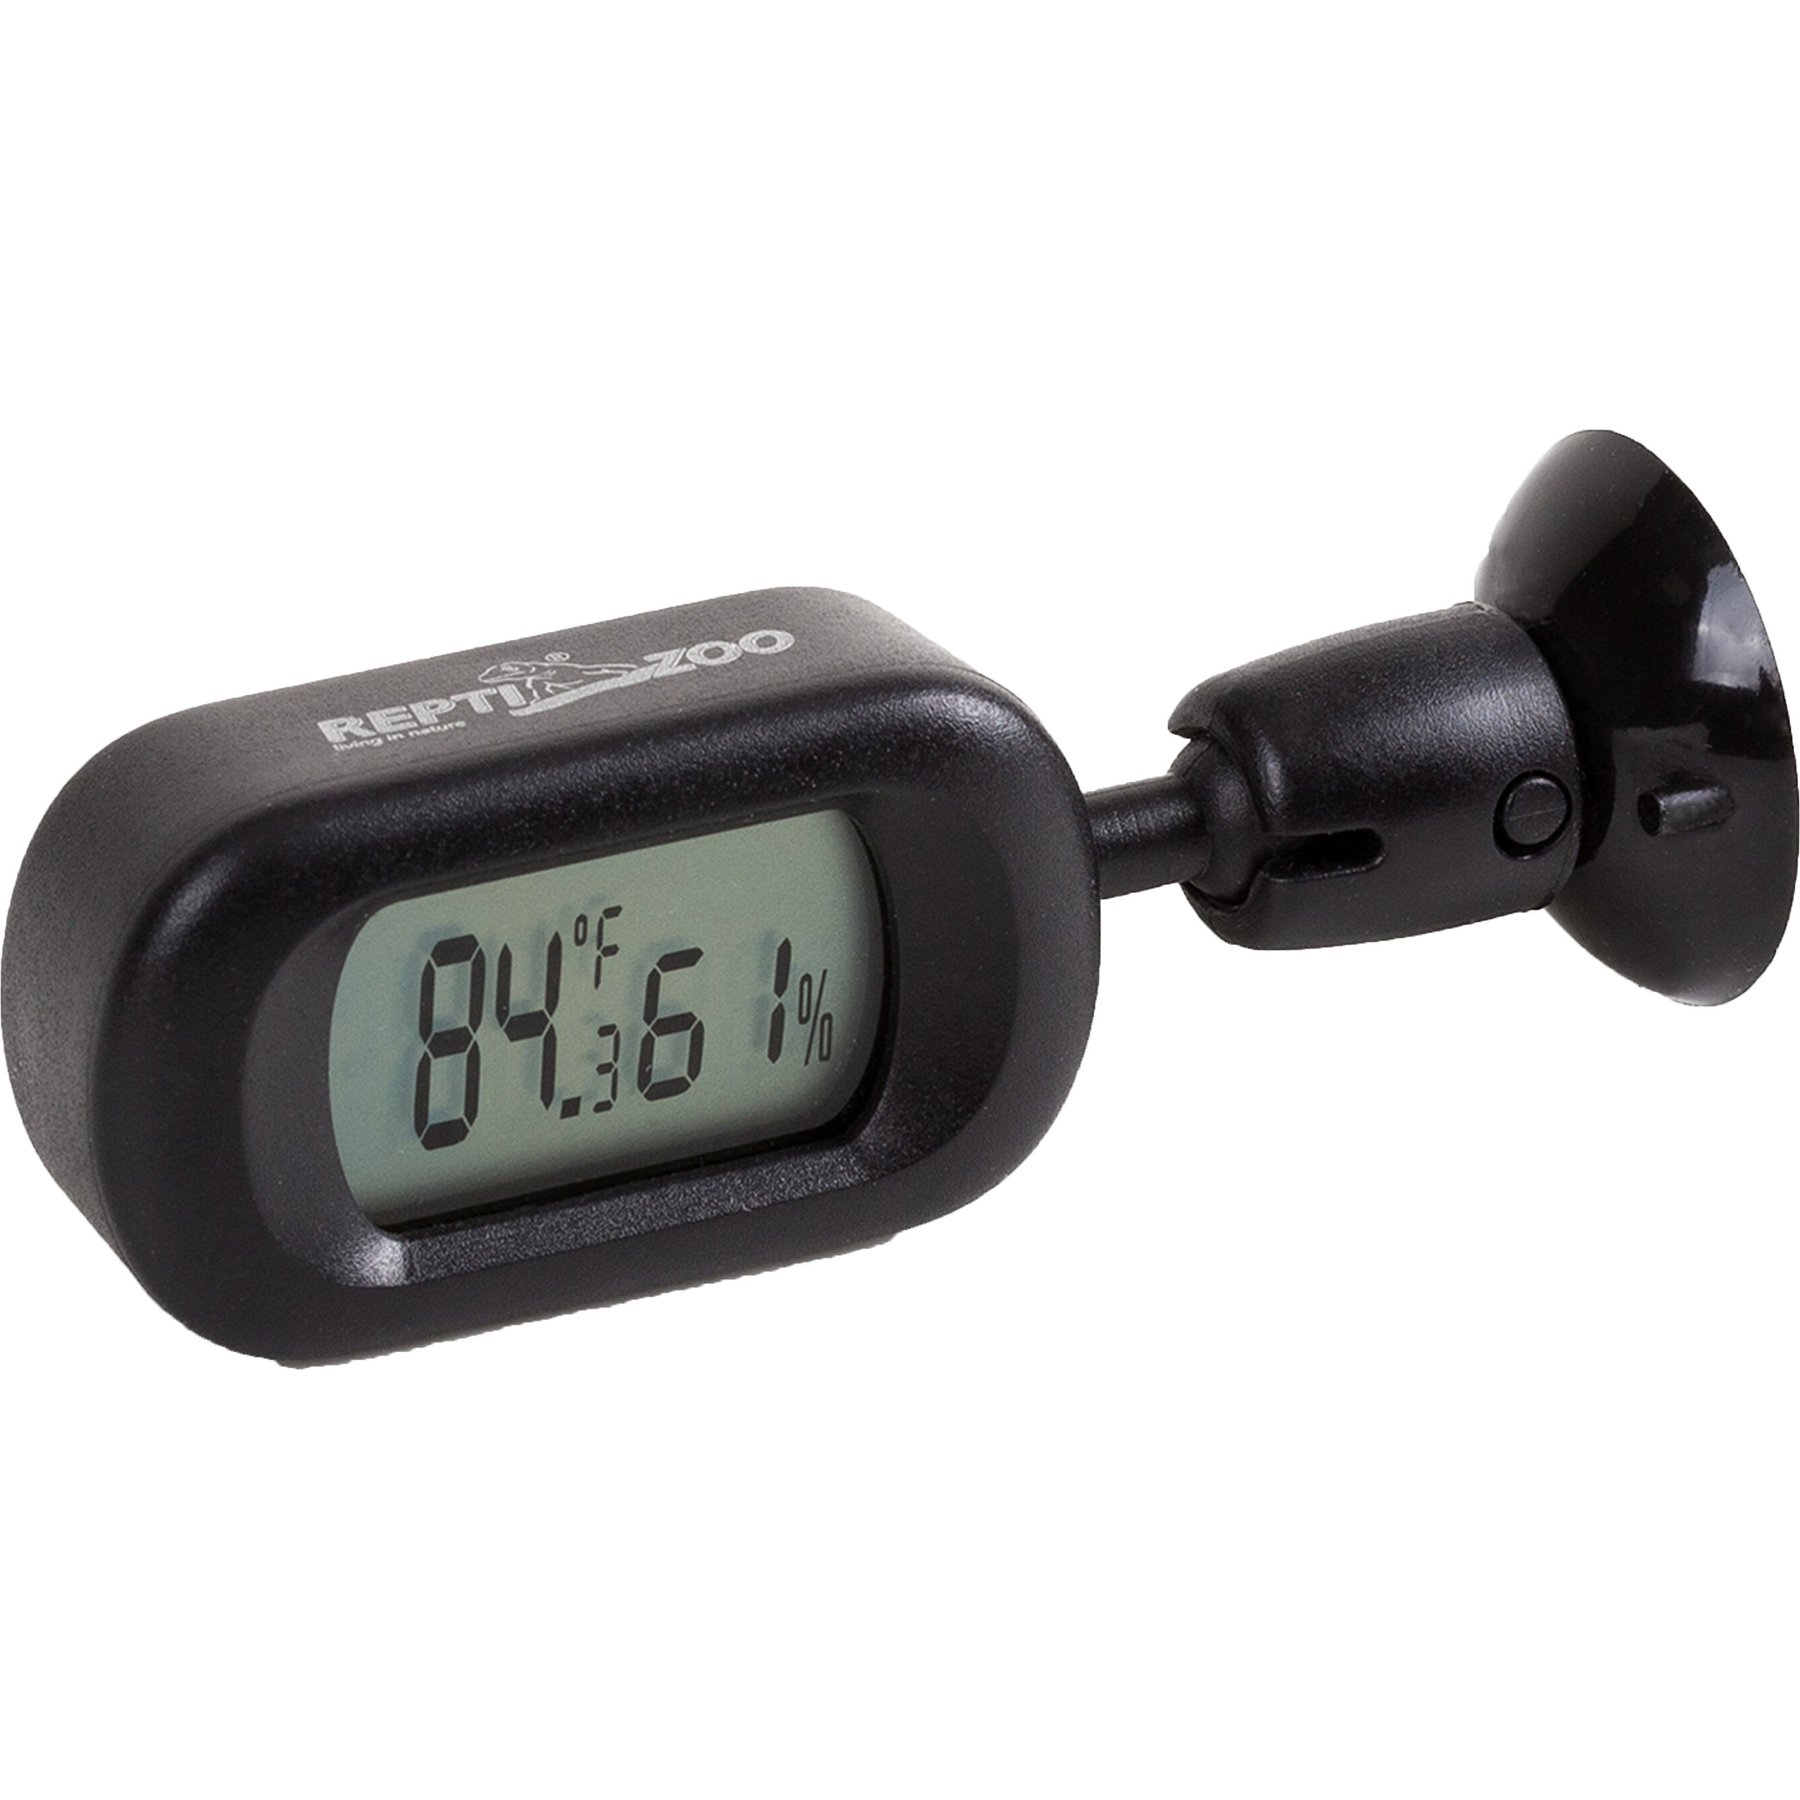 Zilla - Terrarium Hygrometer Thermometer Digital